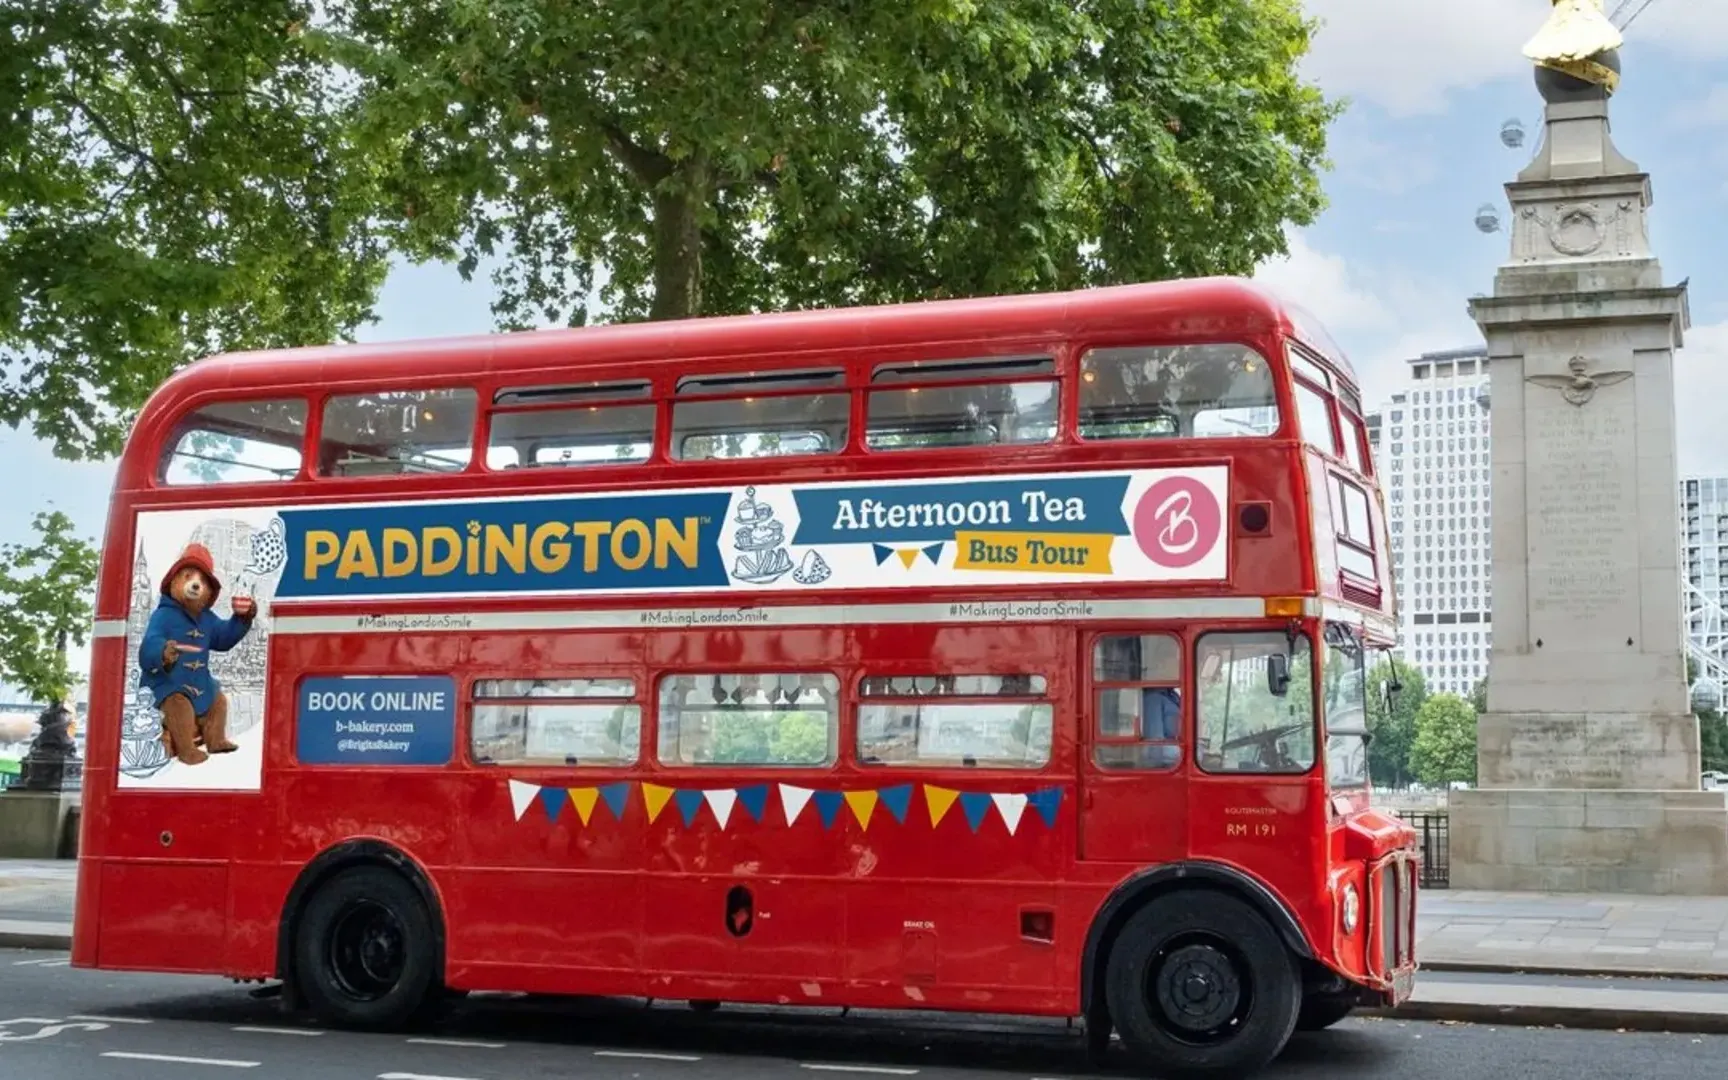 An image of a London Routemaster bus on a Paddington afternoon tea bus tour